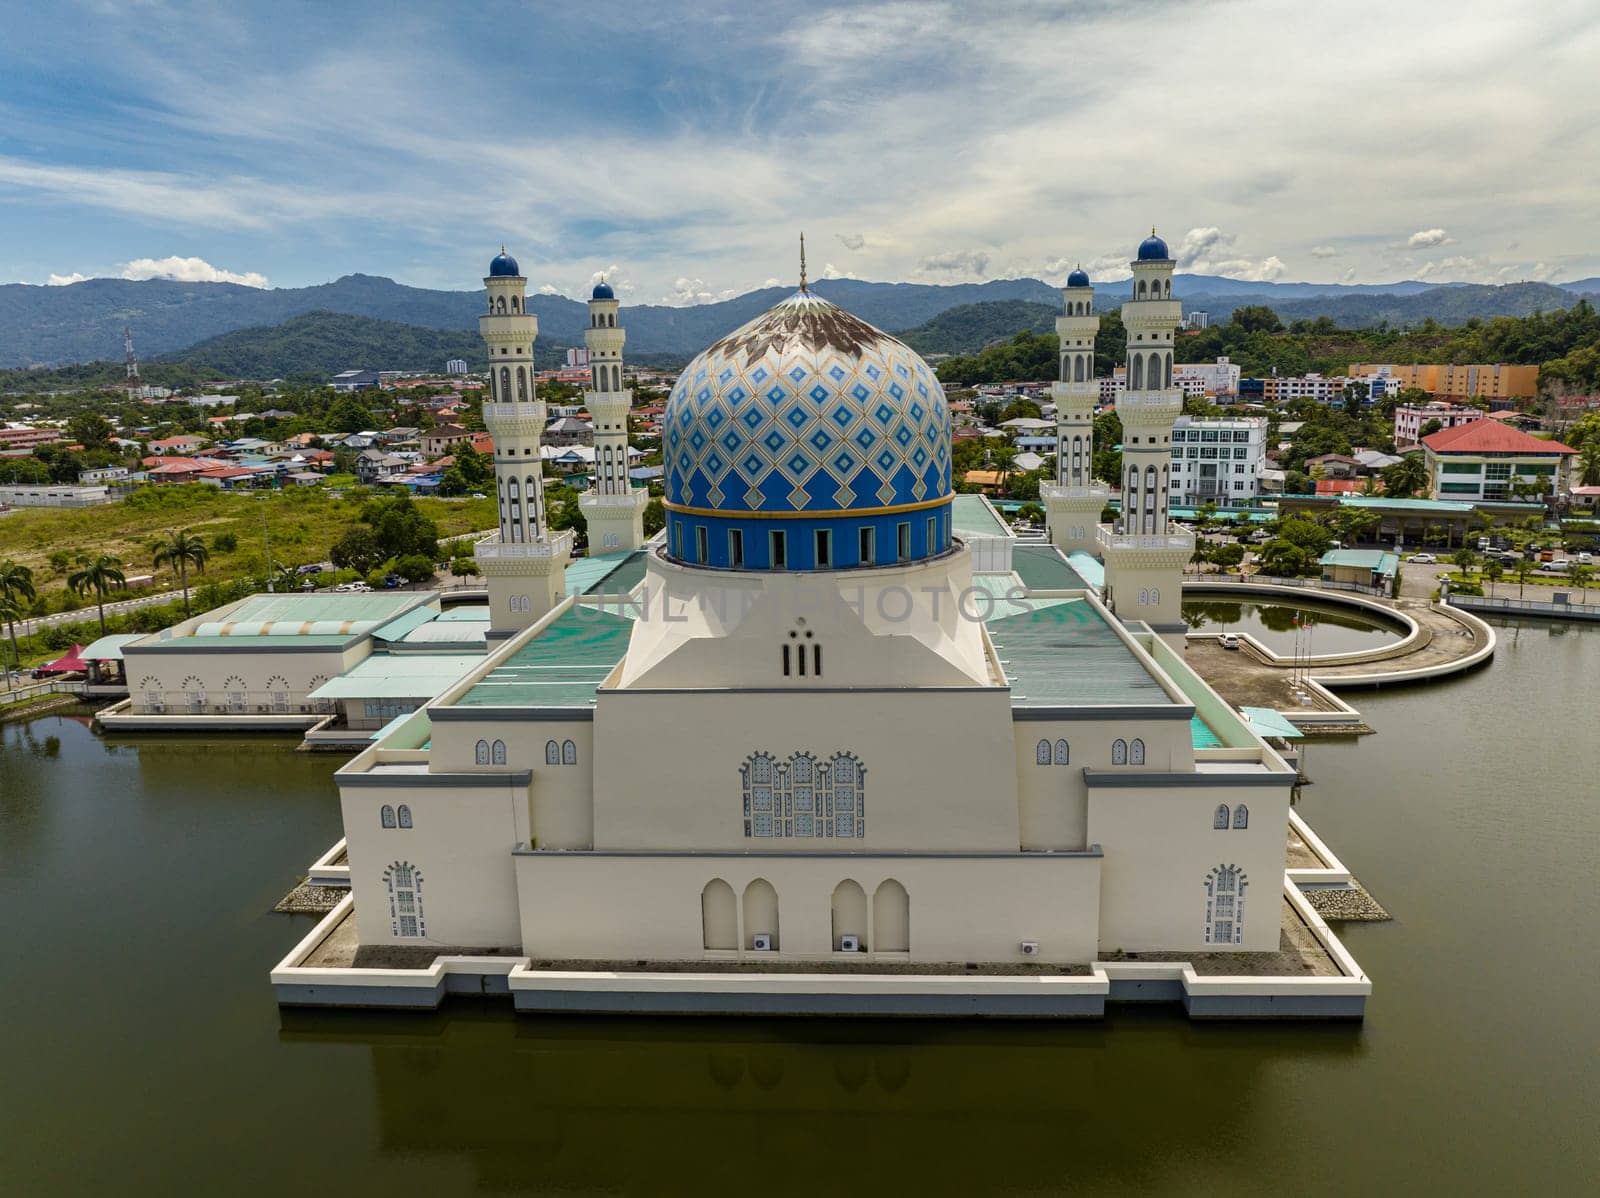 Aerial view of Bandaraya Kota Kinabalu mosque at Likas Kota Kinabalu, Sabah, Borneo.